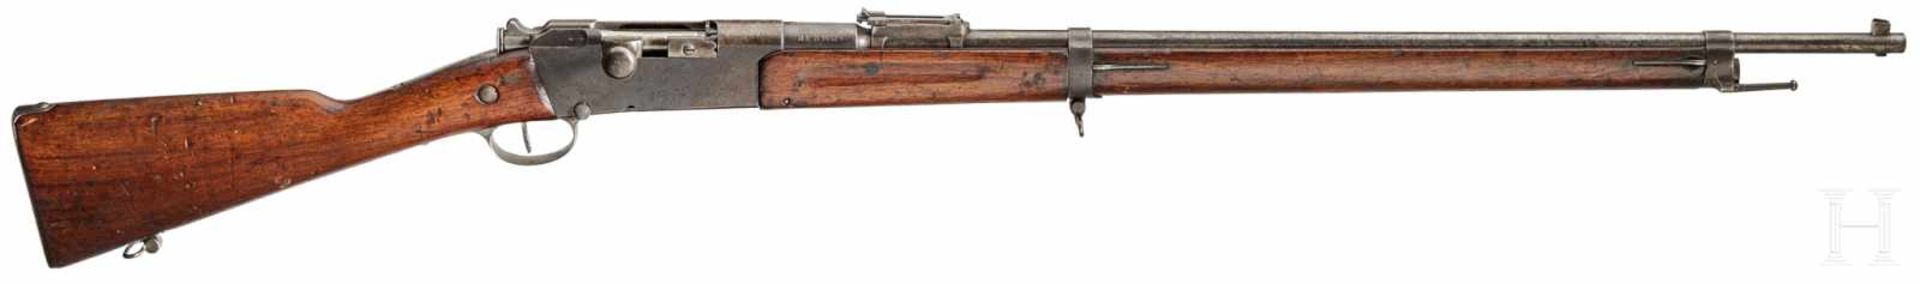 Fusil Lebel M 1886 - M 93